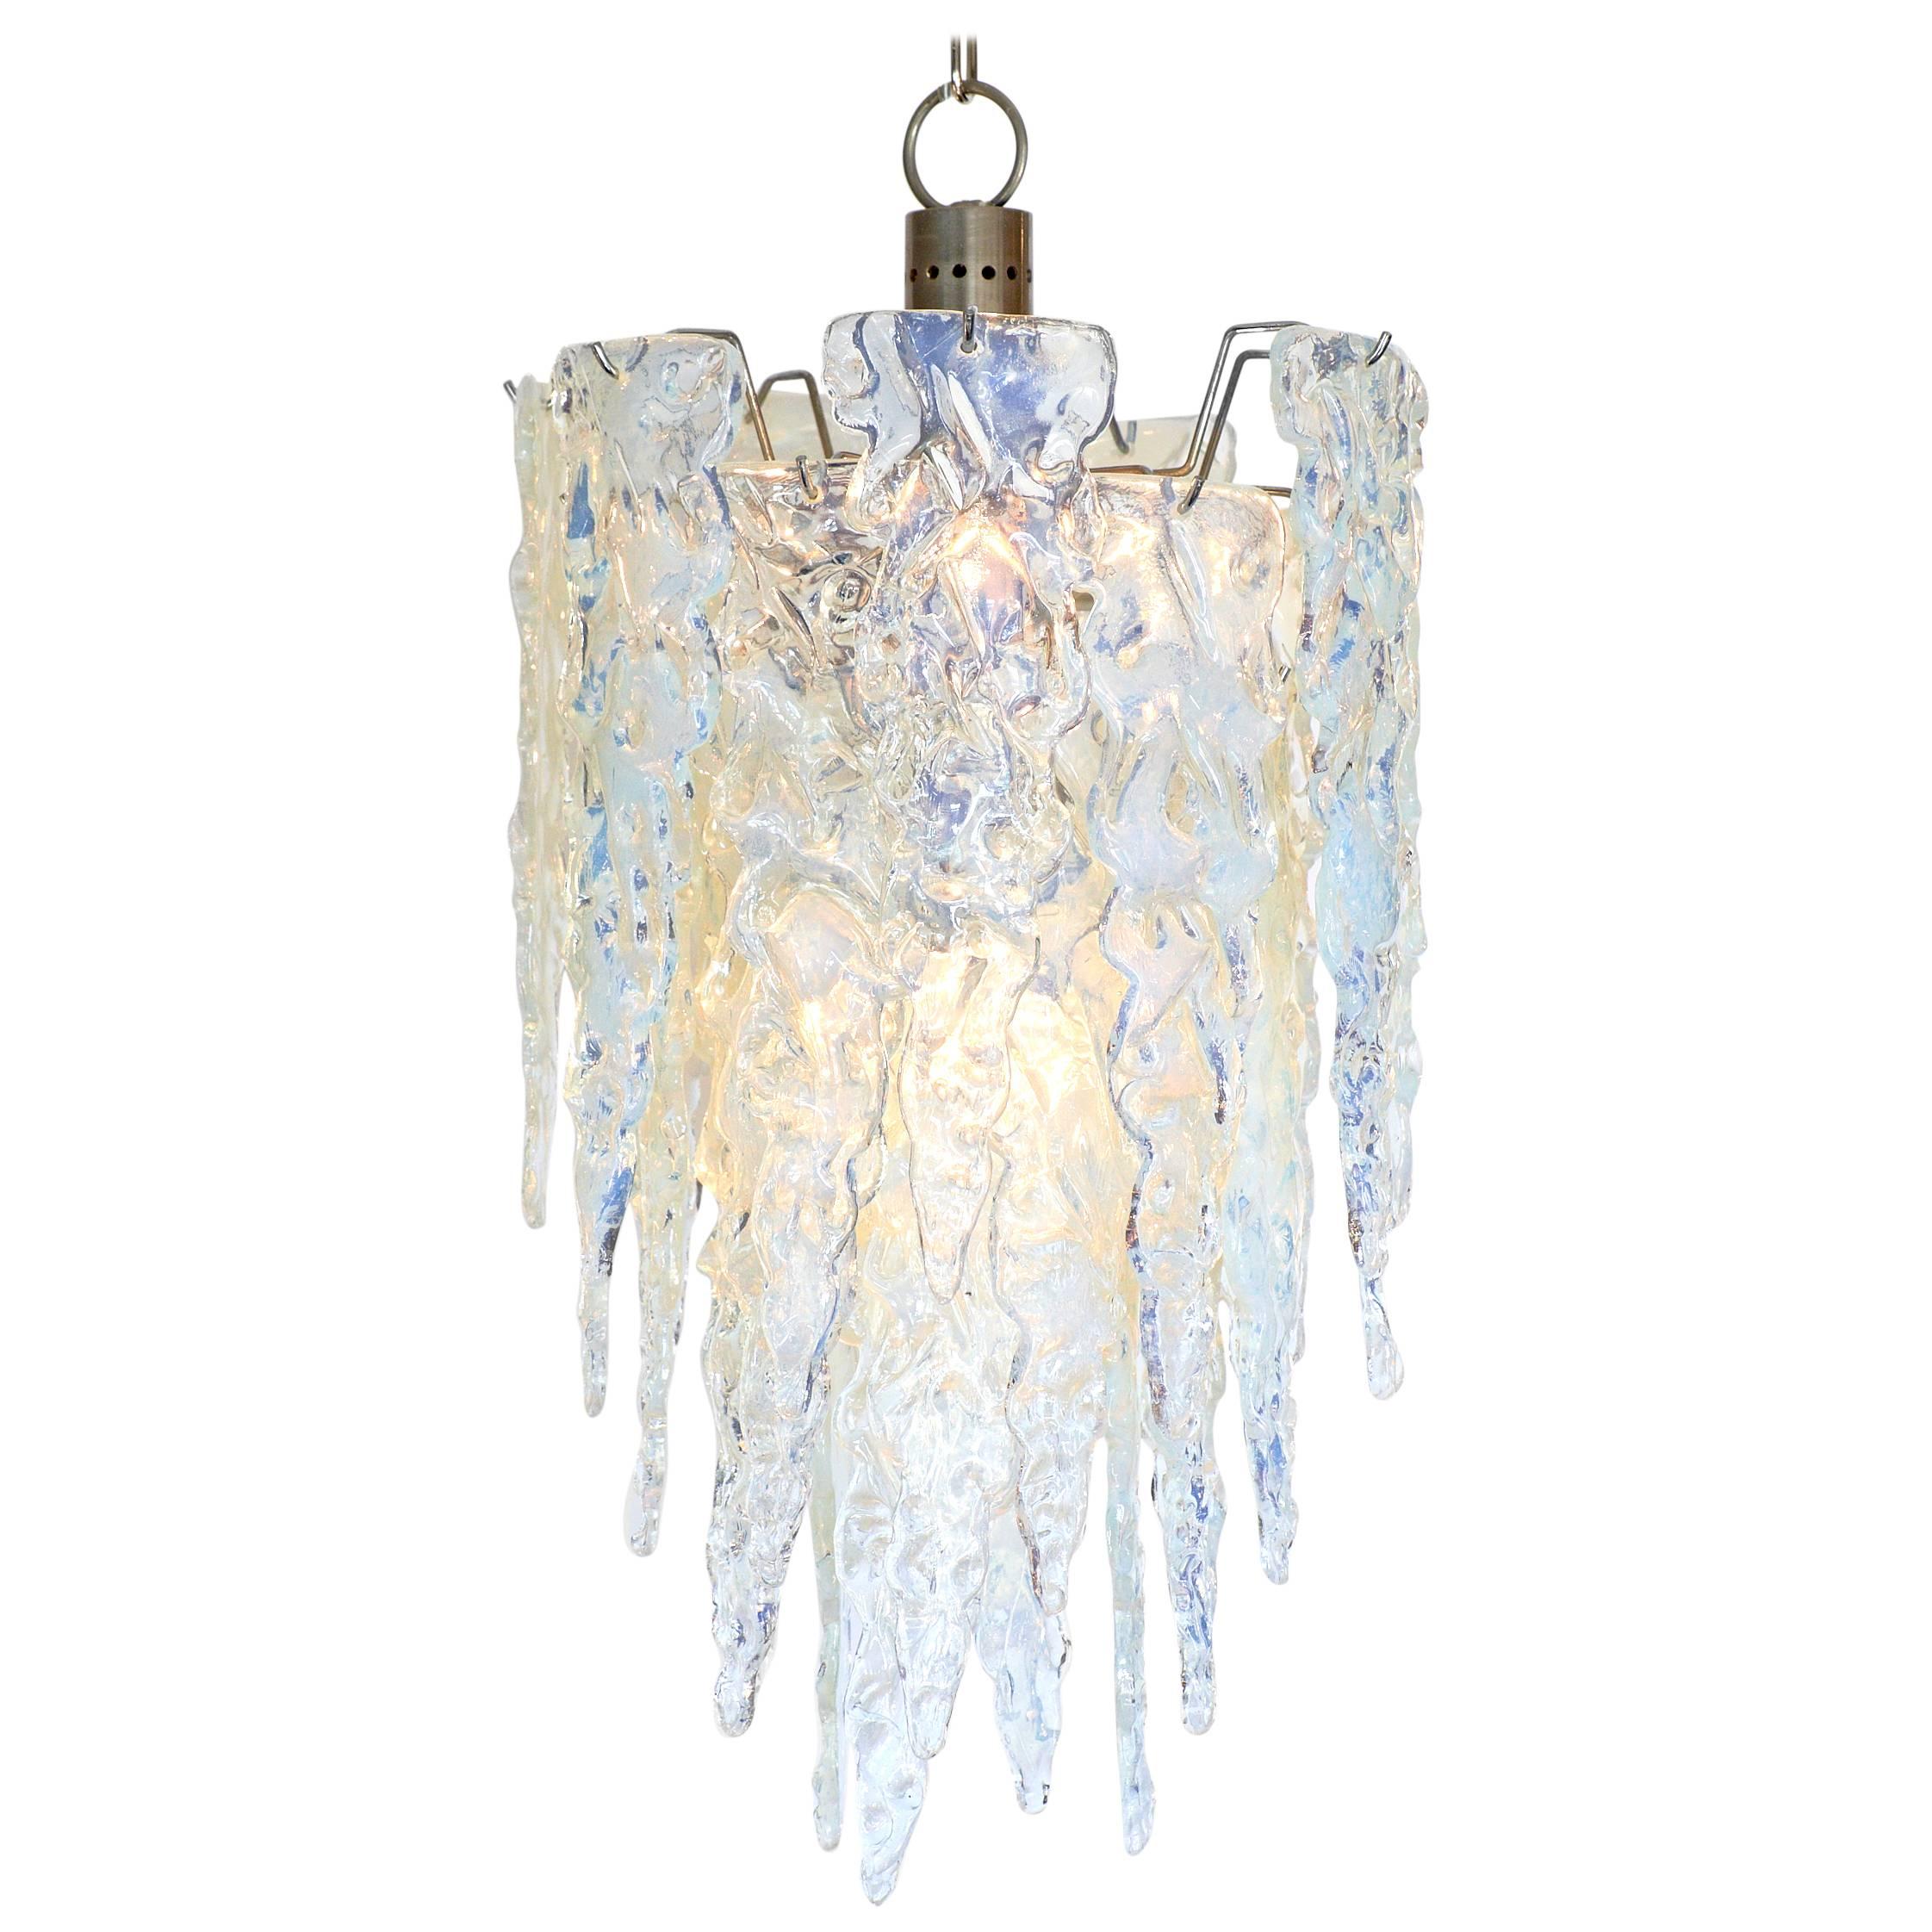 Vintage Iridescent Murano Glass Chandelier For Sale